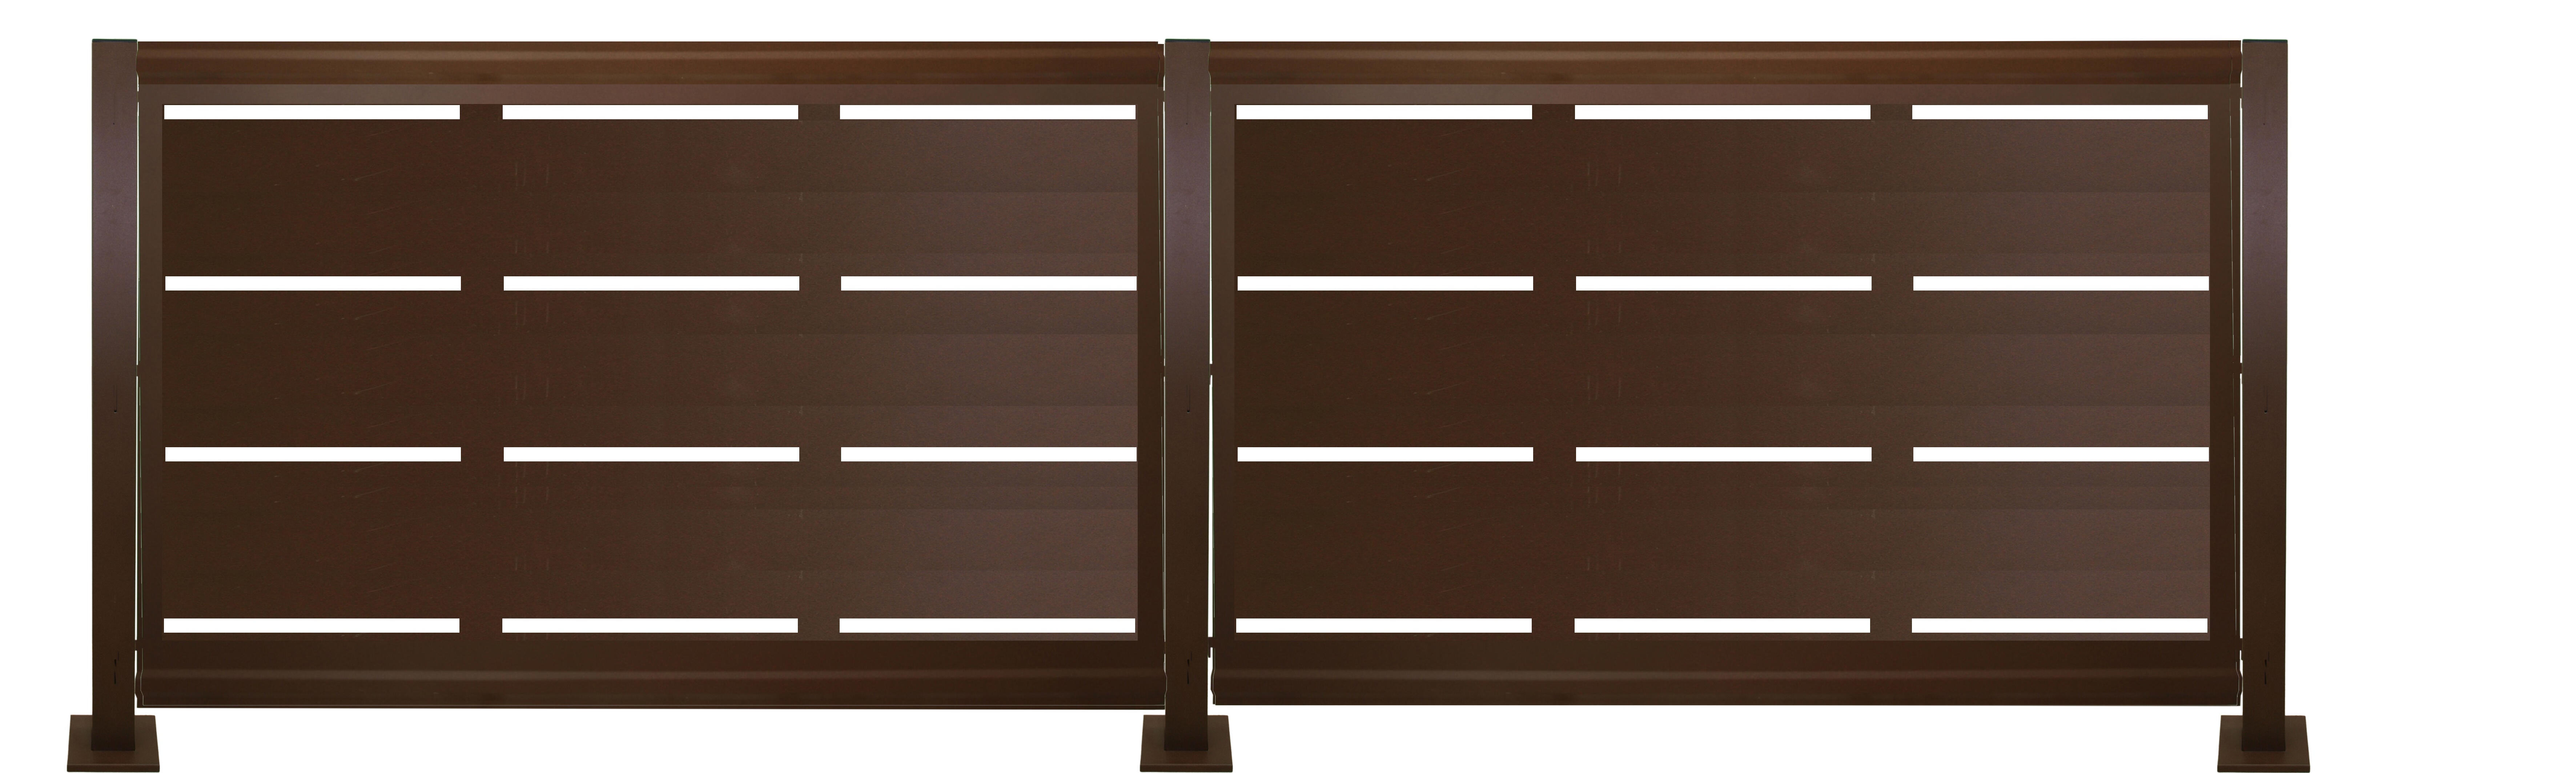 Kit valla de acero galvanizado rayas marrón forja 306x100x13 cm